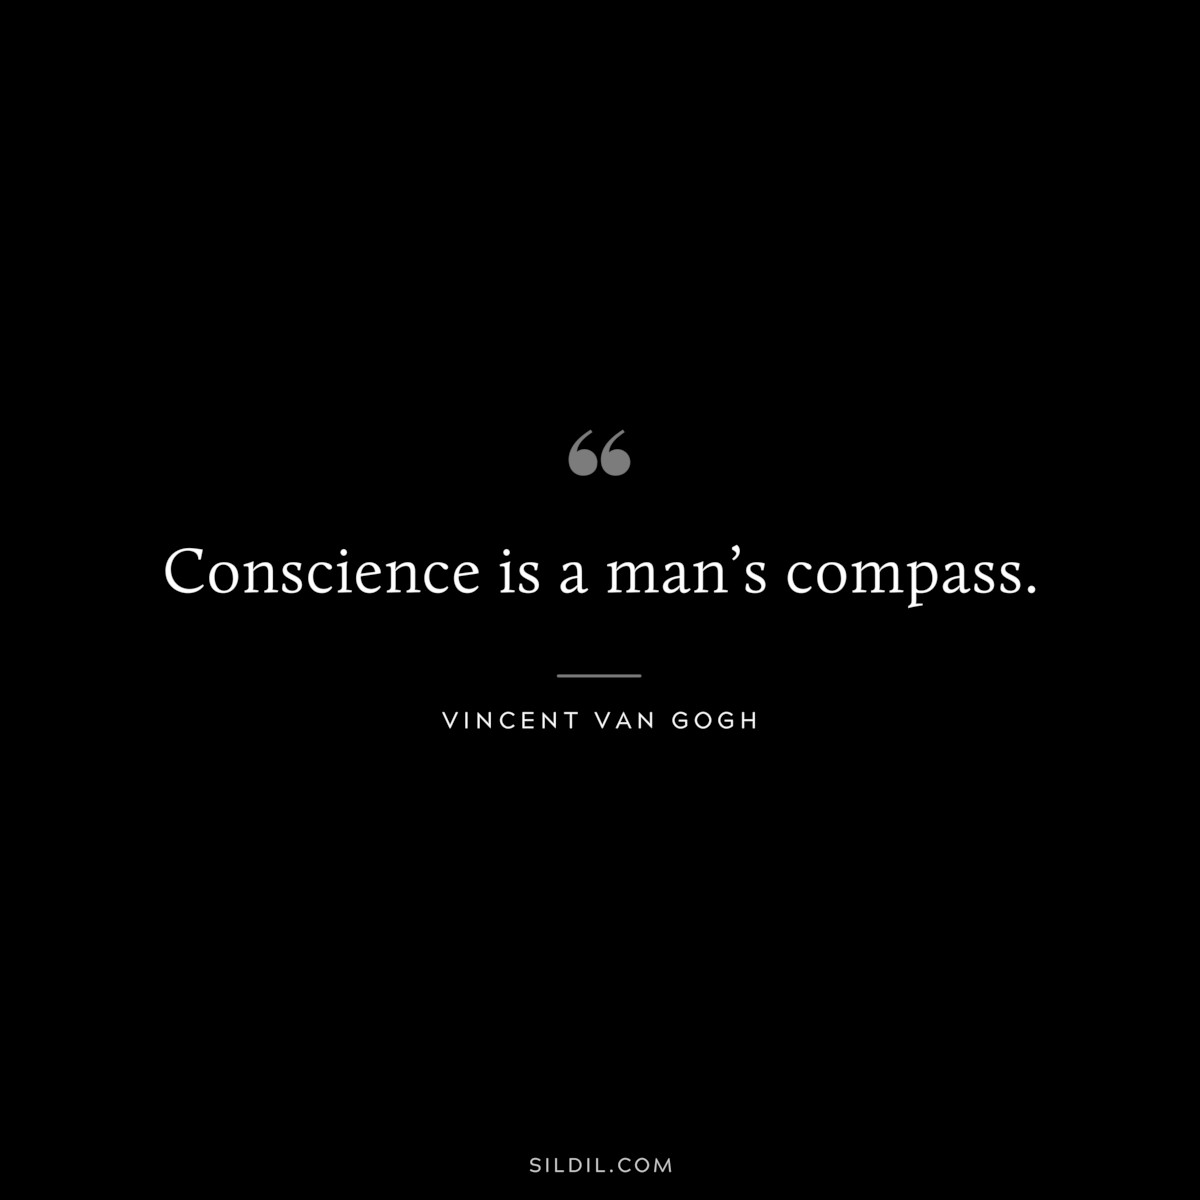 Conscience is a man’s compass. ― Vincent van Gogh